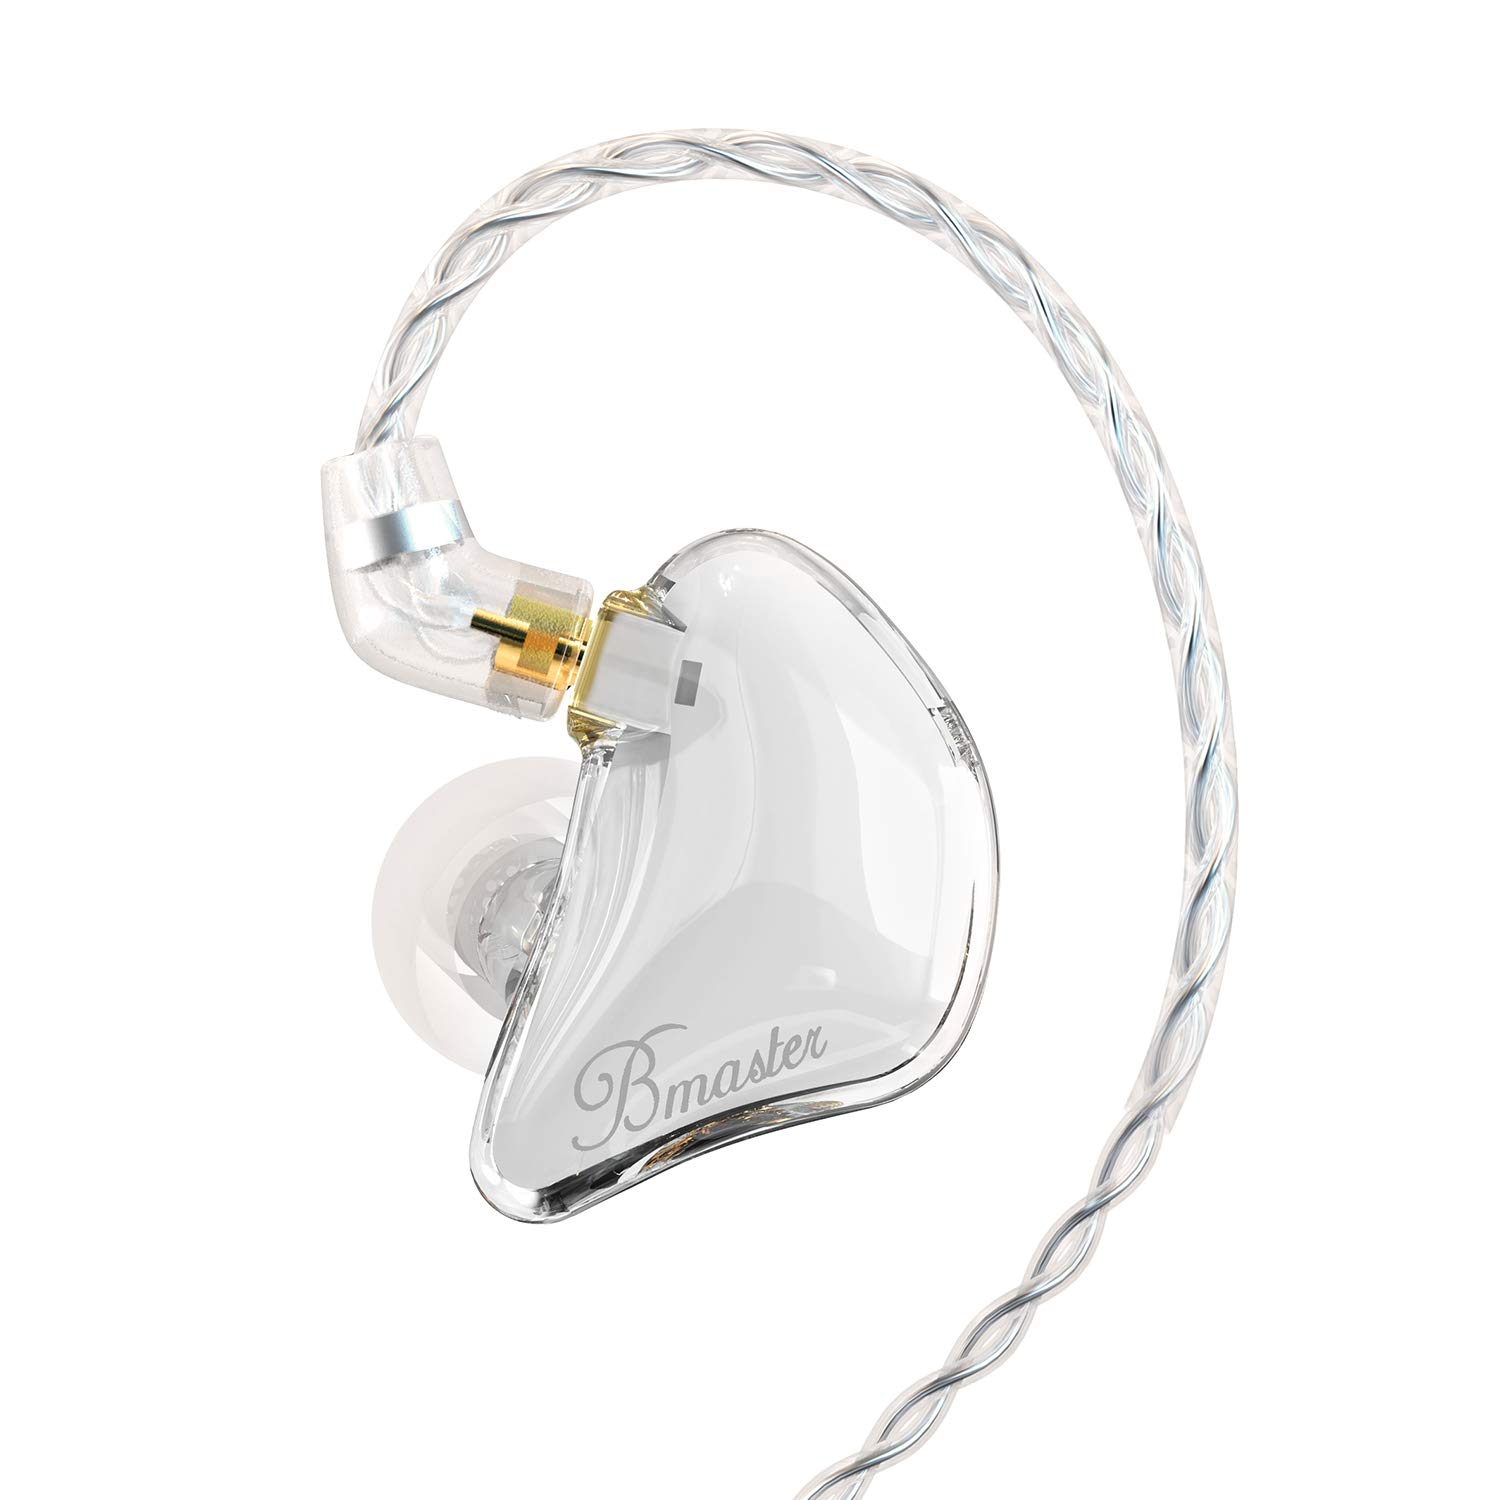 BASN Bmaster Triple Drivers in Ear Monitor Headphone مع اثنين من الكابلات القابلة للفصل تناسب الأذن لمهندس الصوت والموسيقي (أبيض)